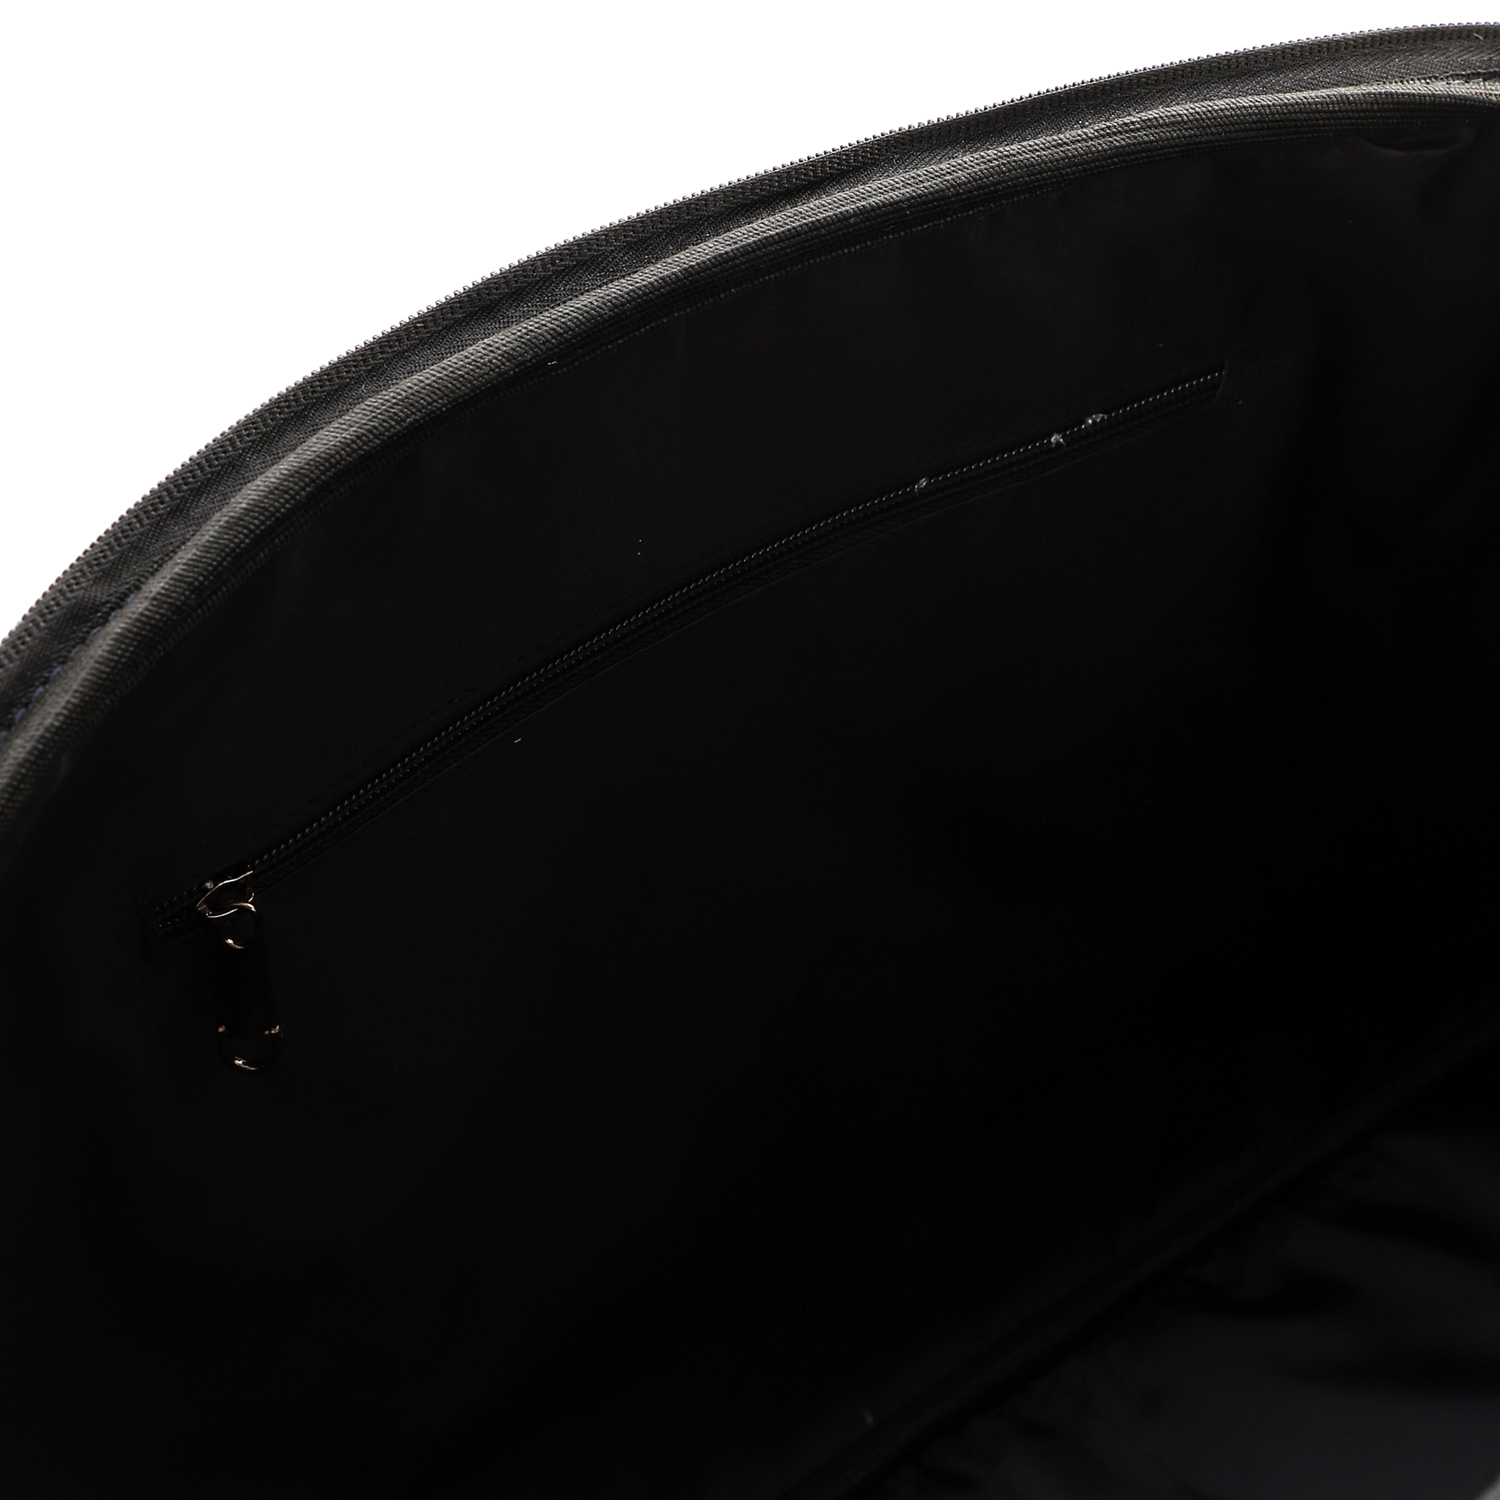 M&O Crocodile design  Zipper Luggage Handbag - Black